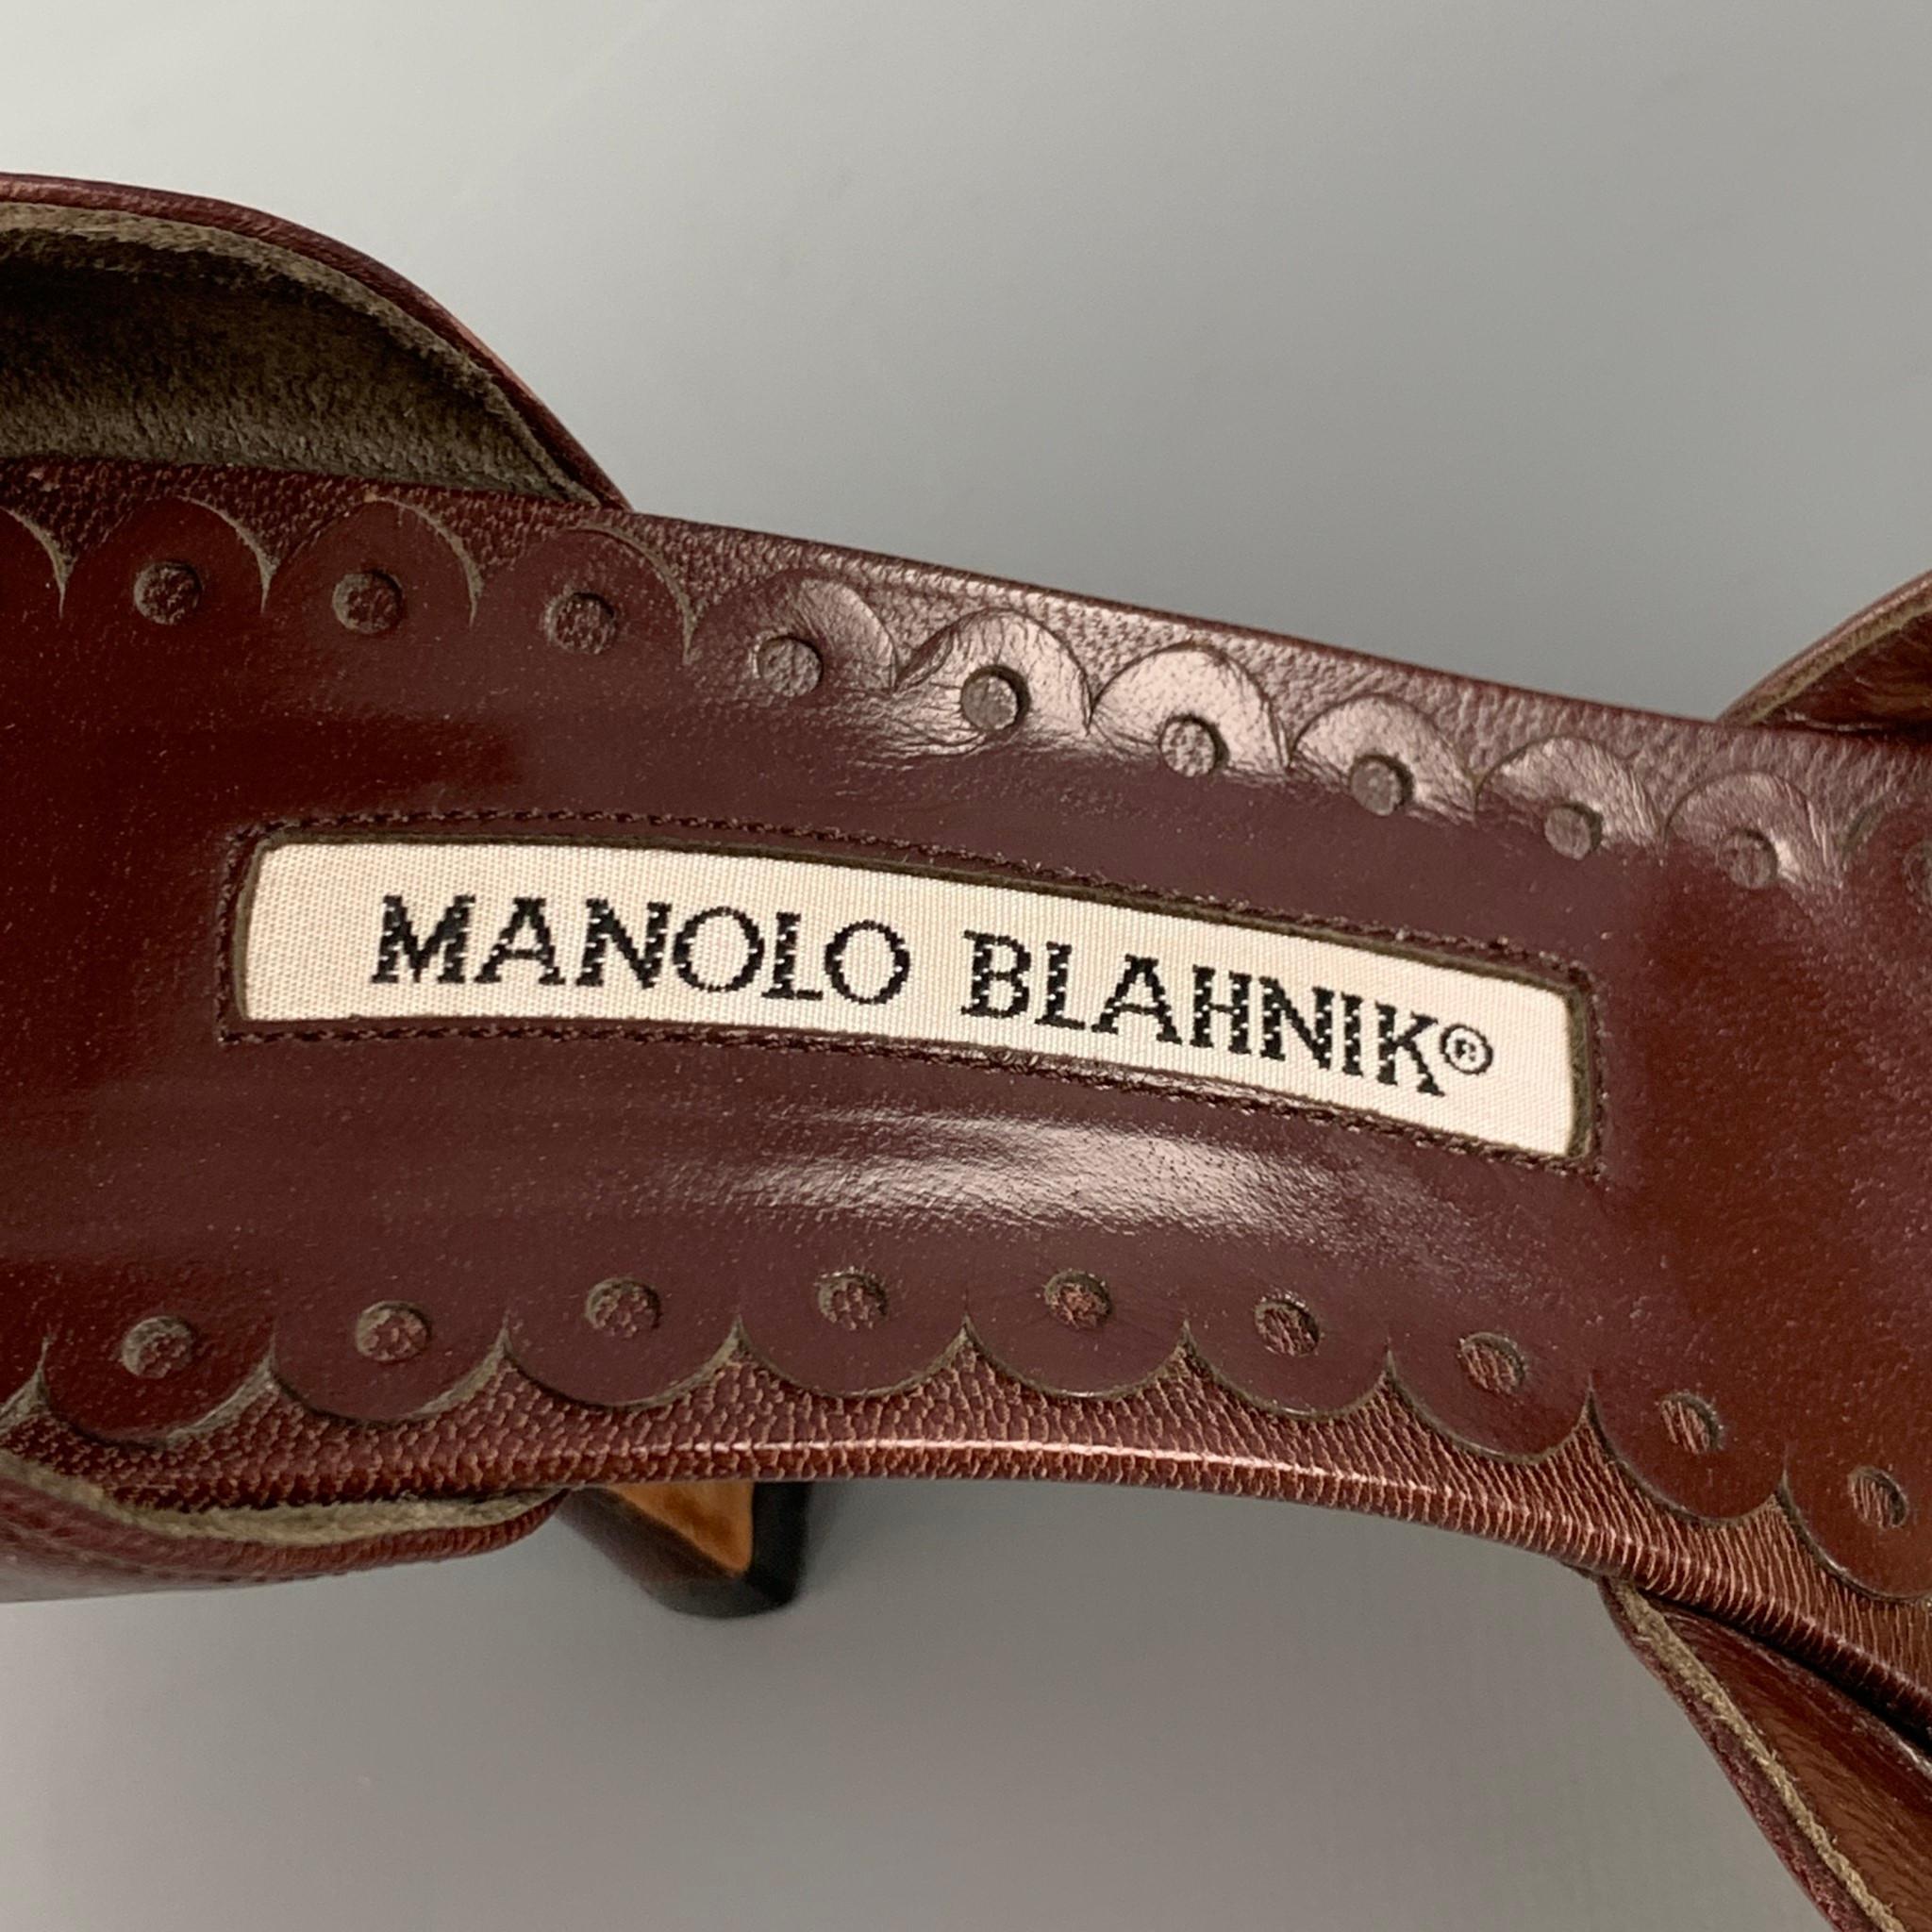 MANOLO BLAHNIK Size 7 Brown Leather D'Orsay Pumps 2